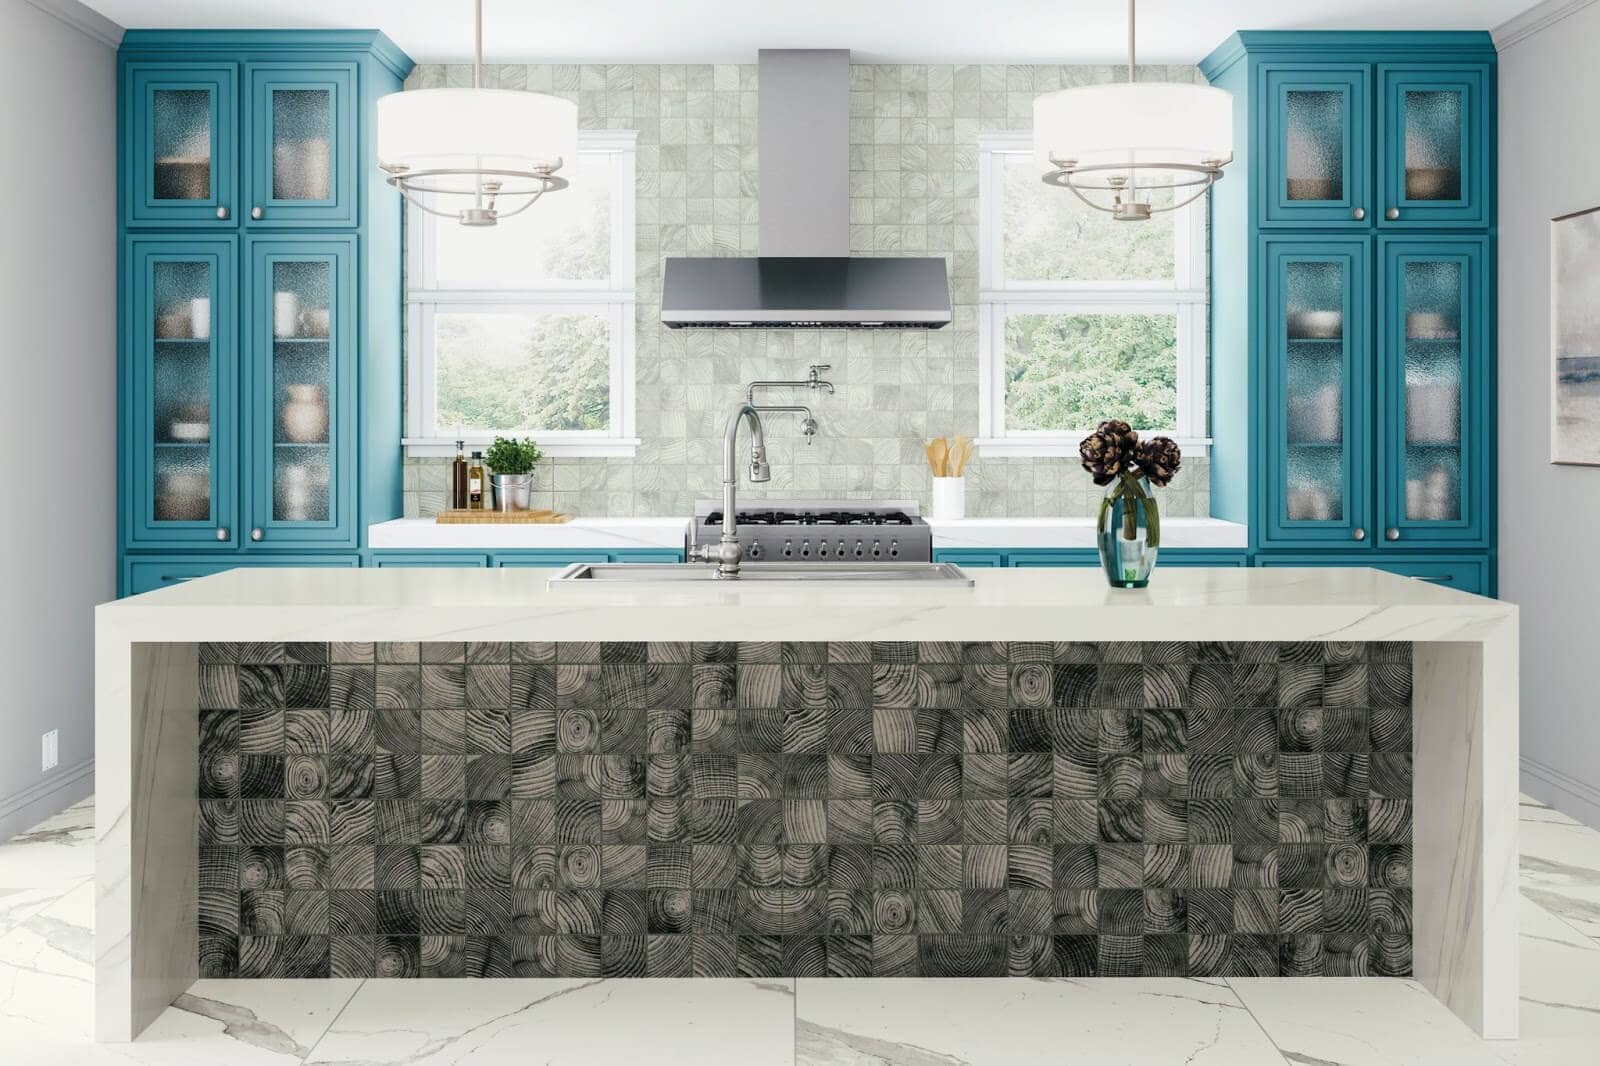  kitchen island or bar with dark backsplash tile